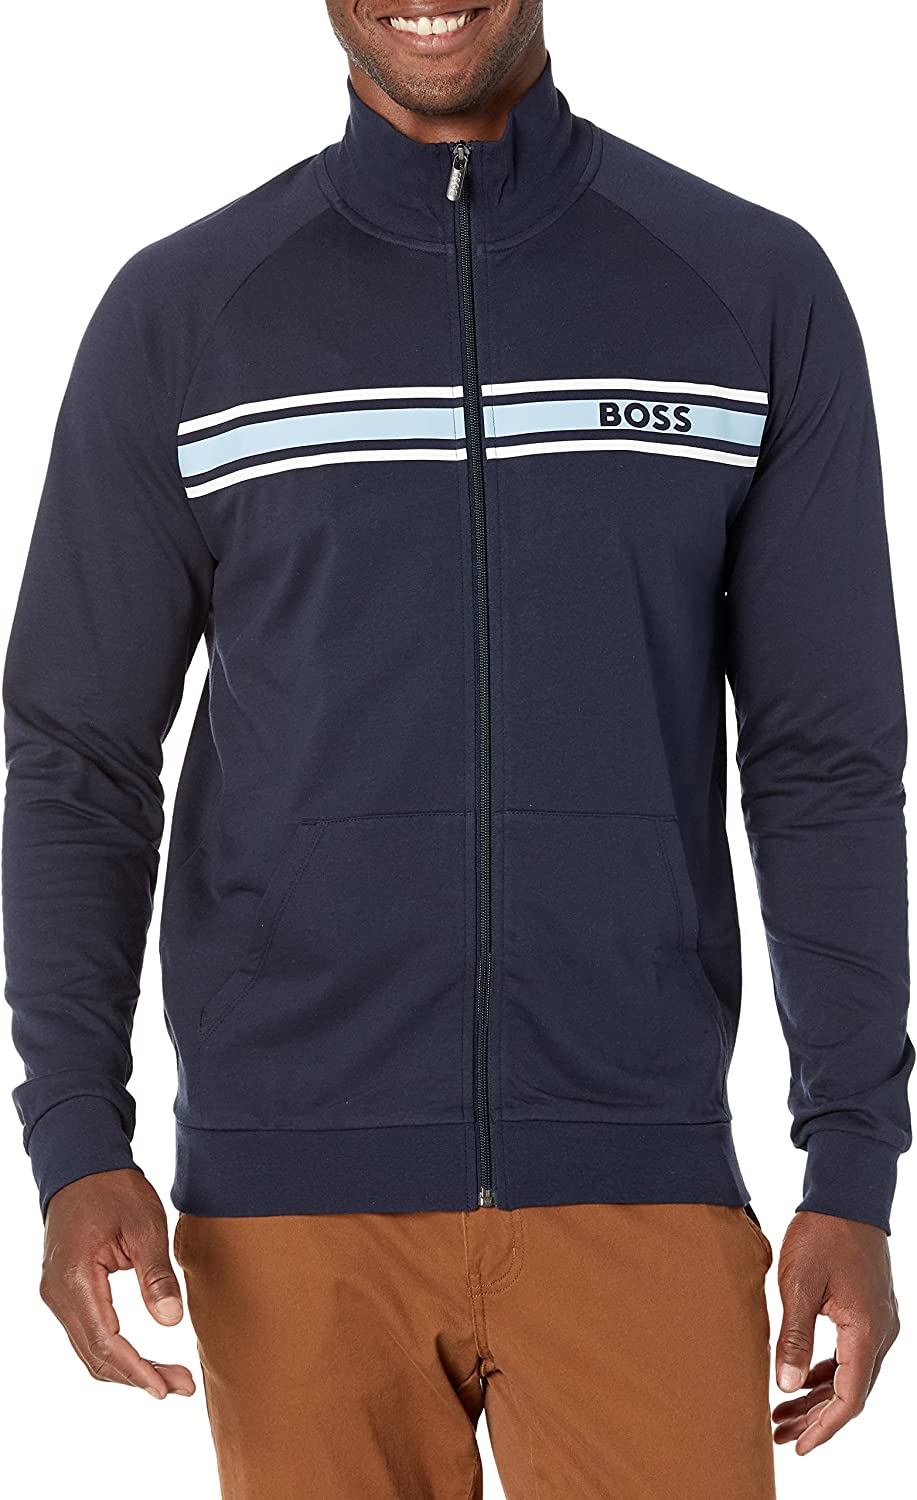 BOSS Mens Authentic Jacket Pajama Top Stark Navy